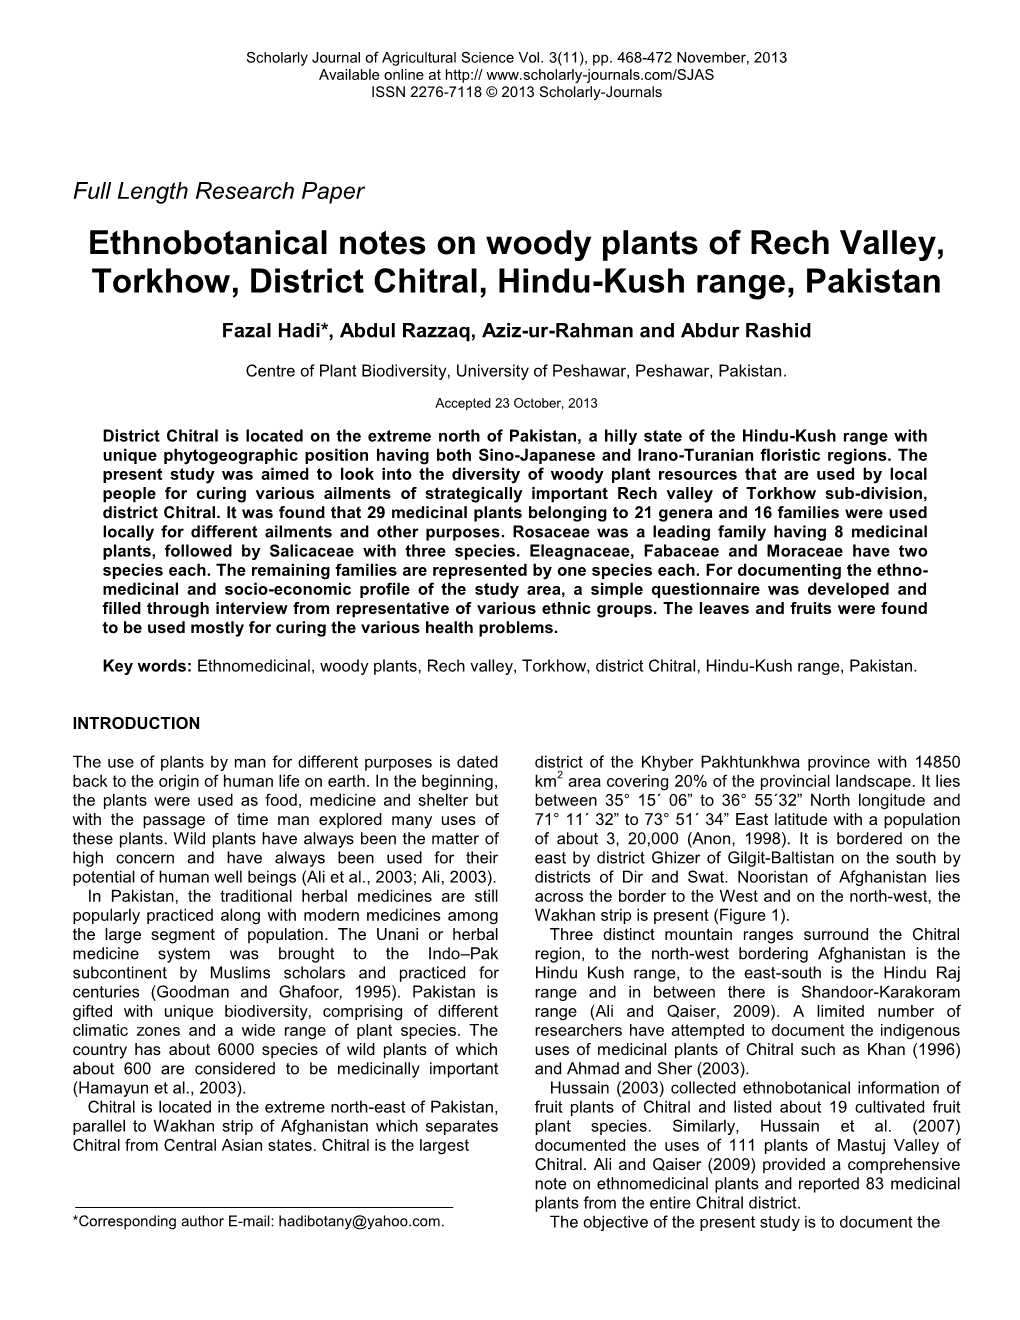 Ethnobotanical Notes on Woody Plants of Rech Valley, Torkhow, District Chitral, Hindu-Kush Range, Pakistan